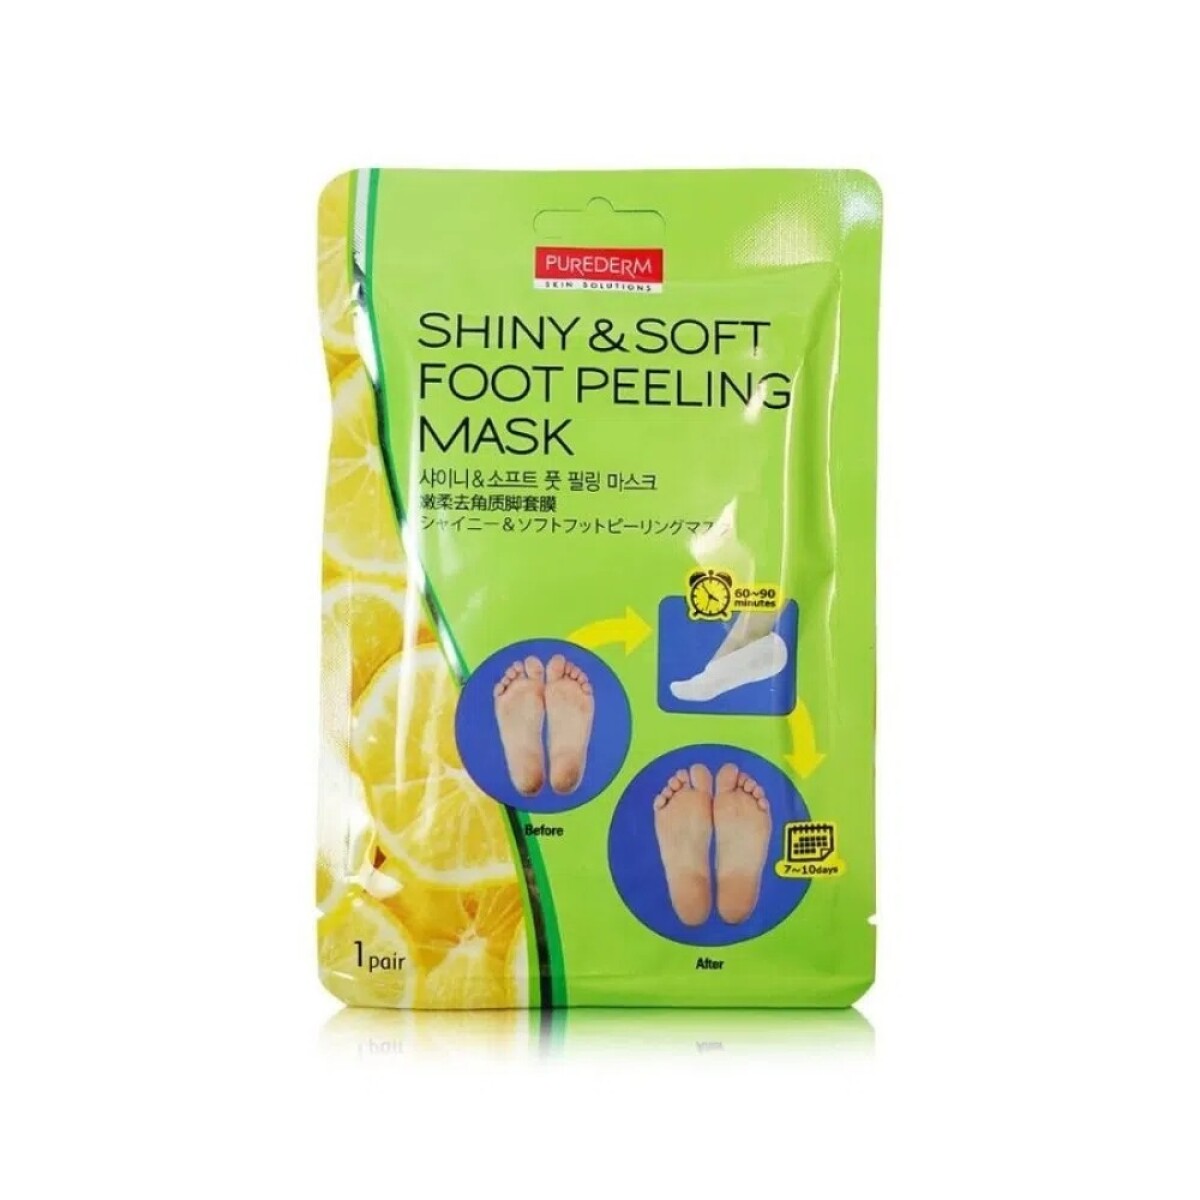 Purederm Shiny & Soft Foot Peeling Mask 